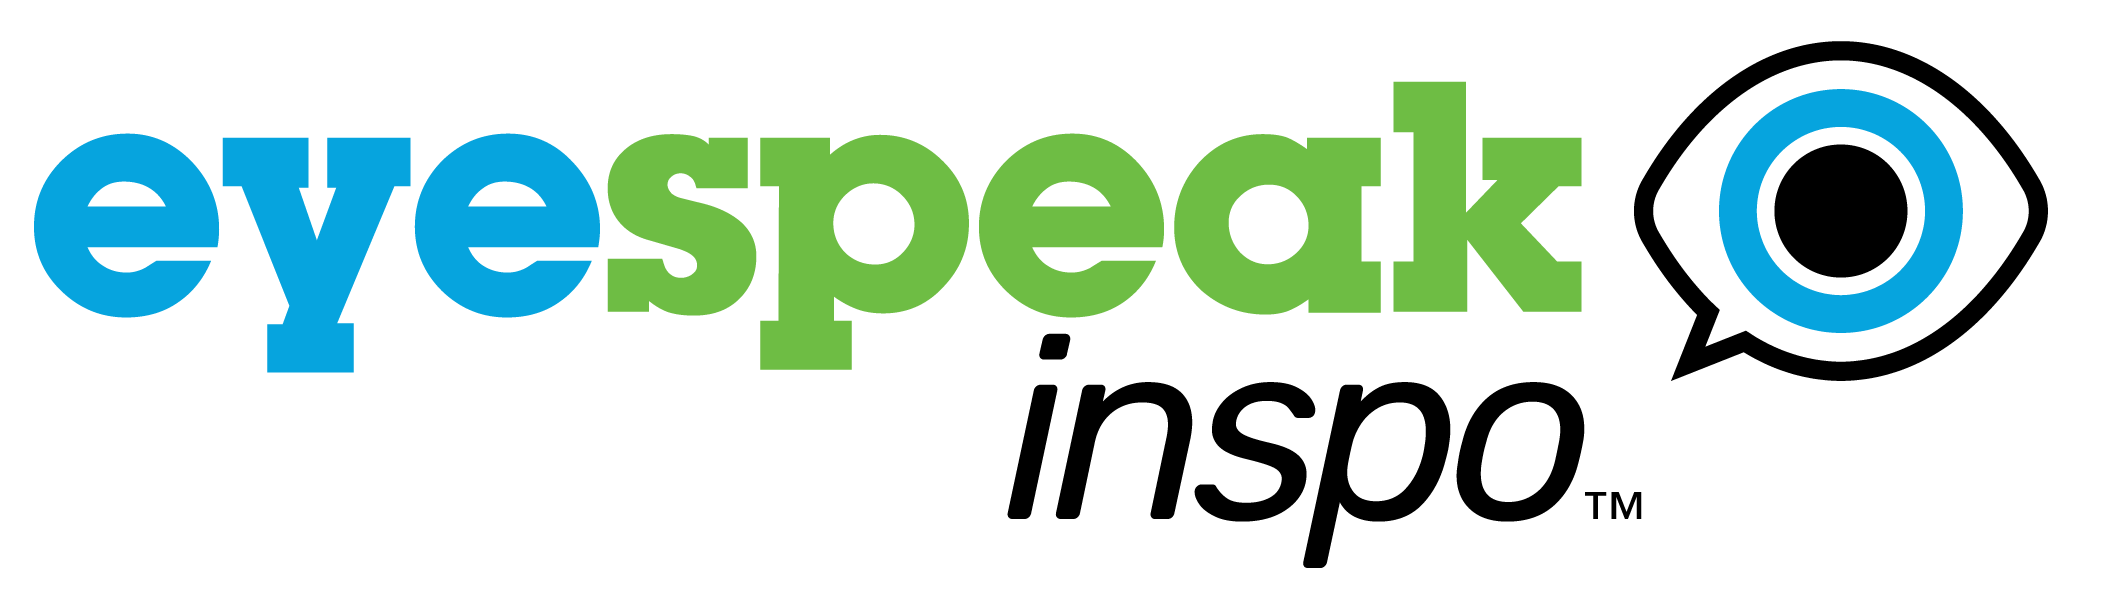 eyespeak inspo logo